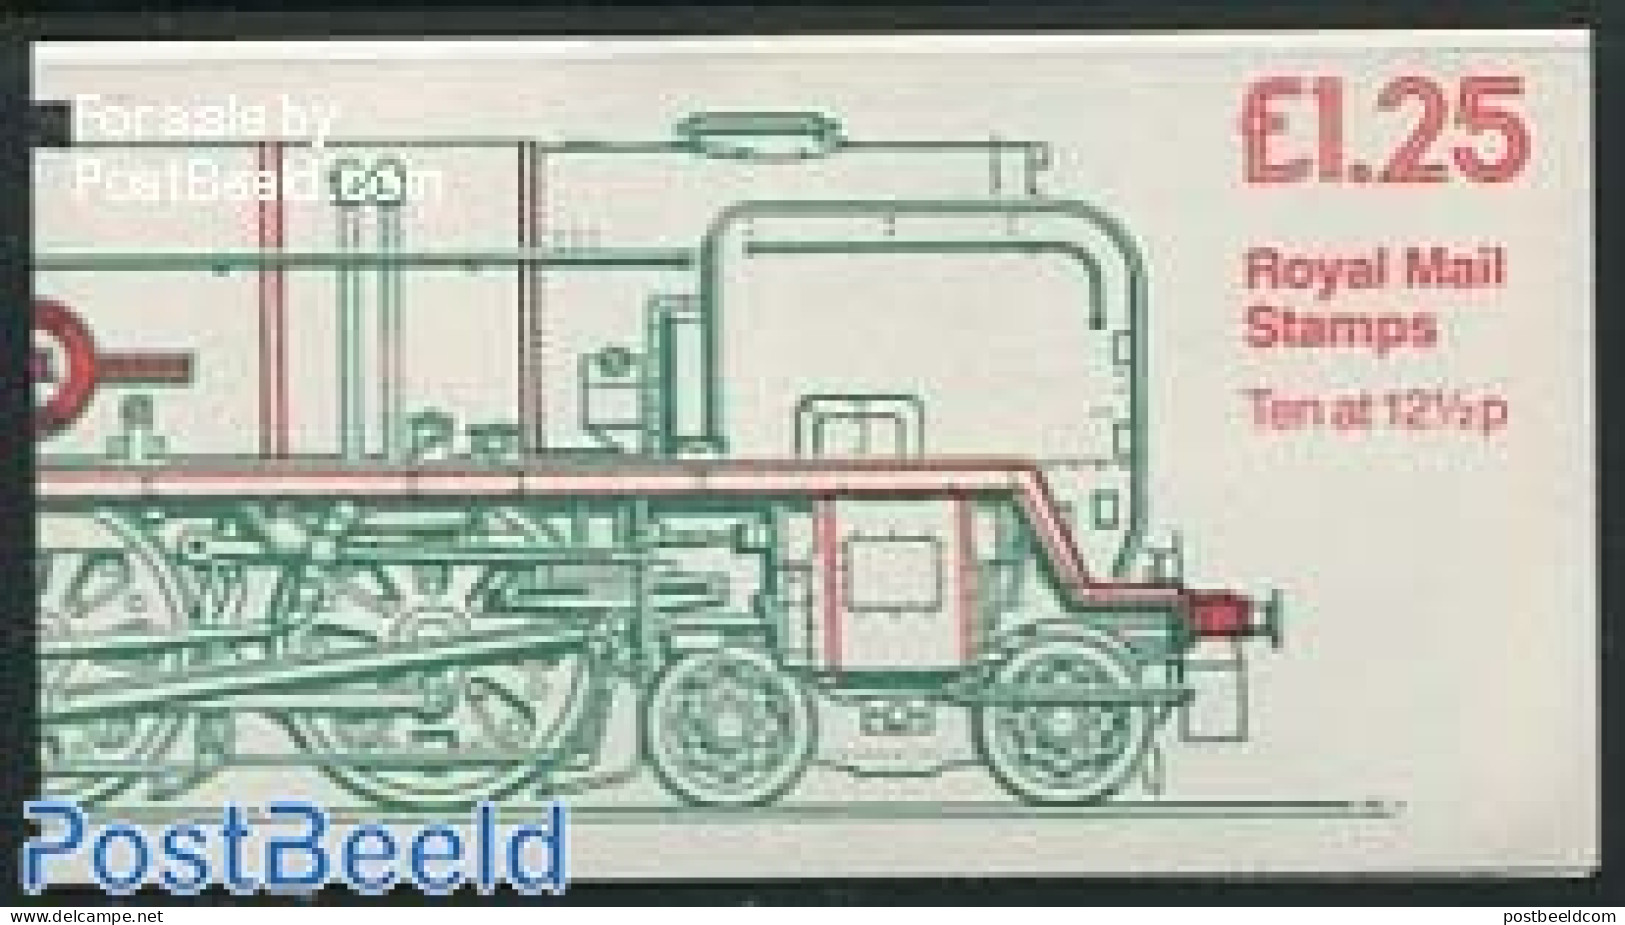 Great Britain 1983 Def. Booklet, SR/BR Clan Line, Selvedge At Left, Mint NH, Transport - Stamp Booklets - Railways - Ungebraucht